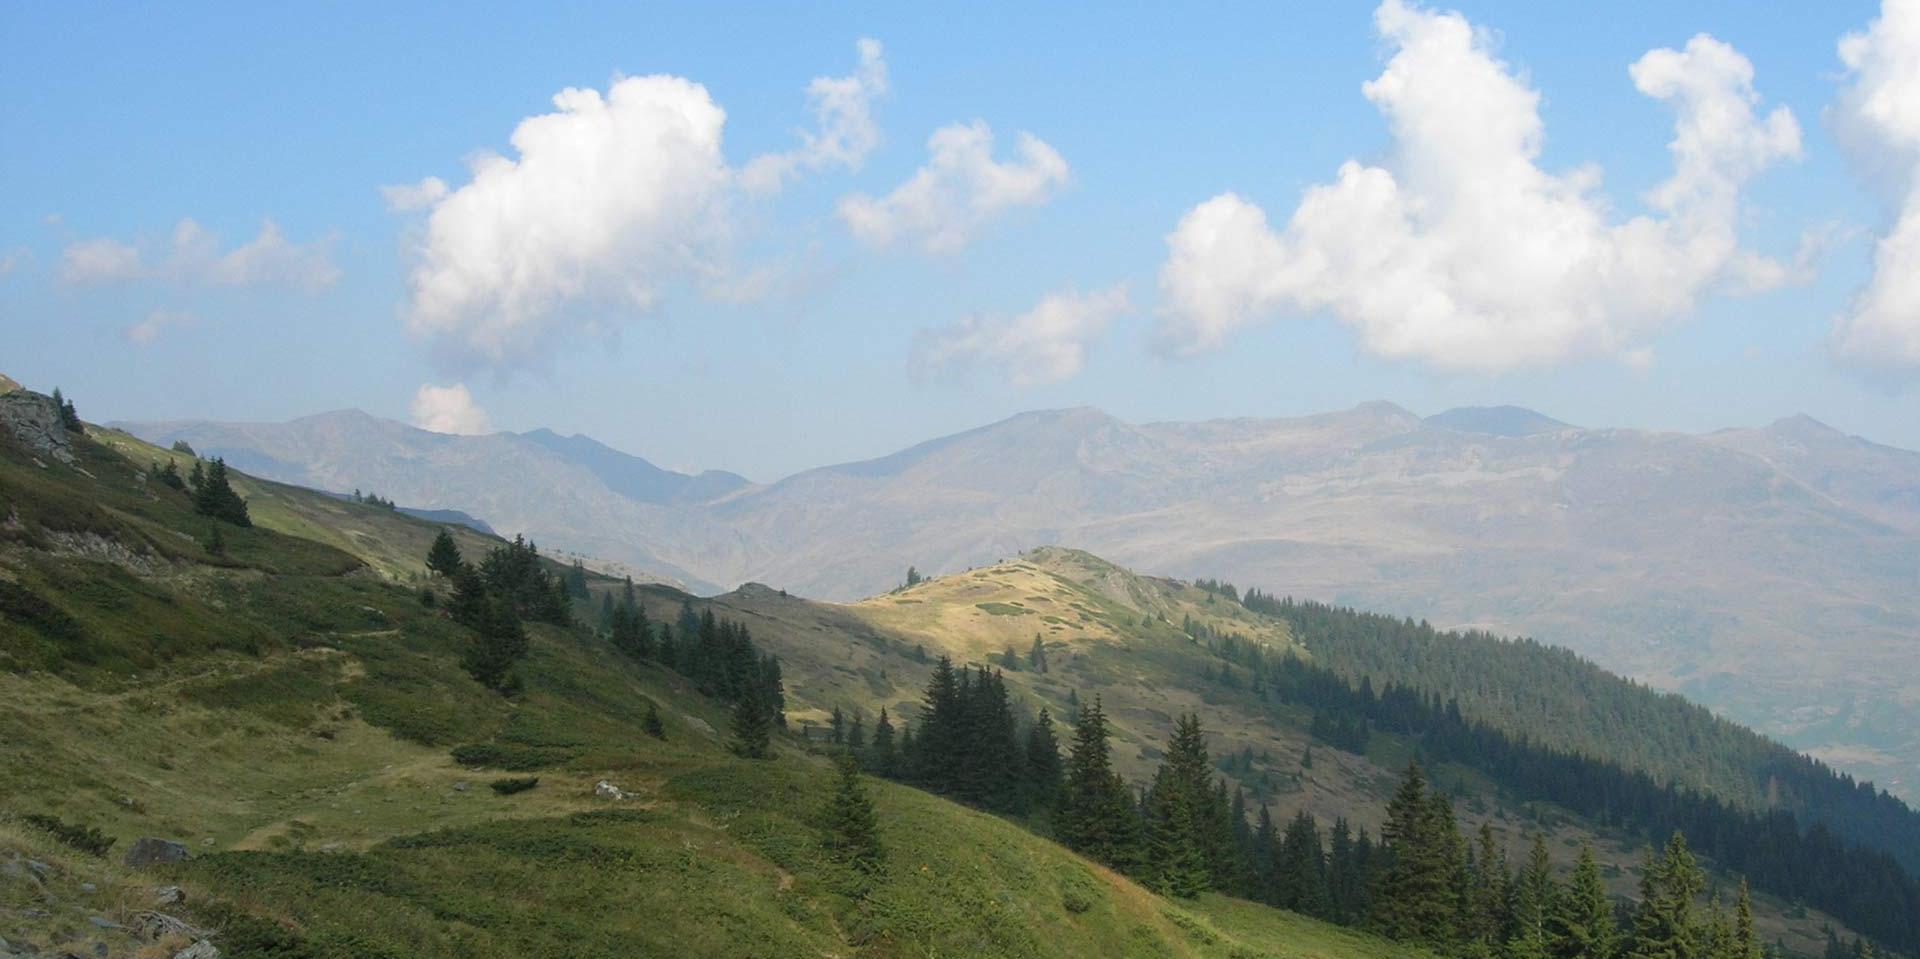 Sunlit mountains on the Balkan Green Belt